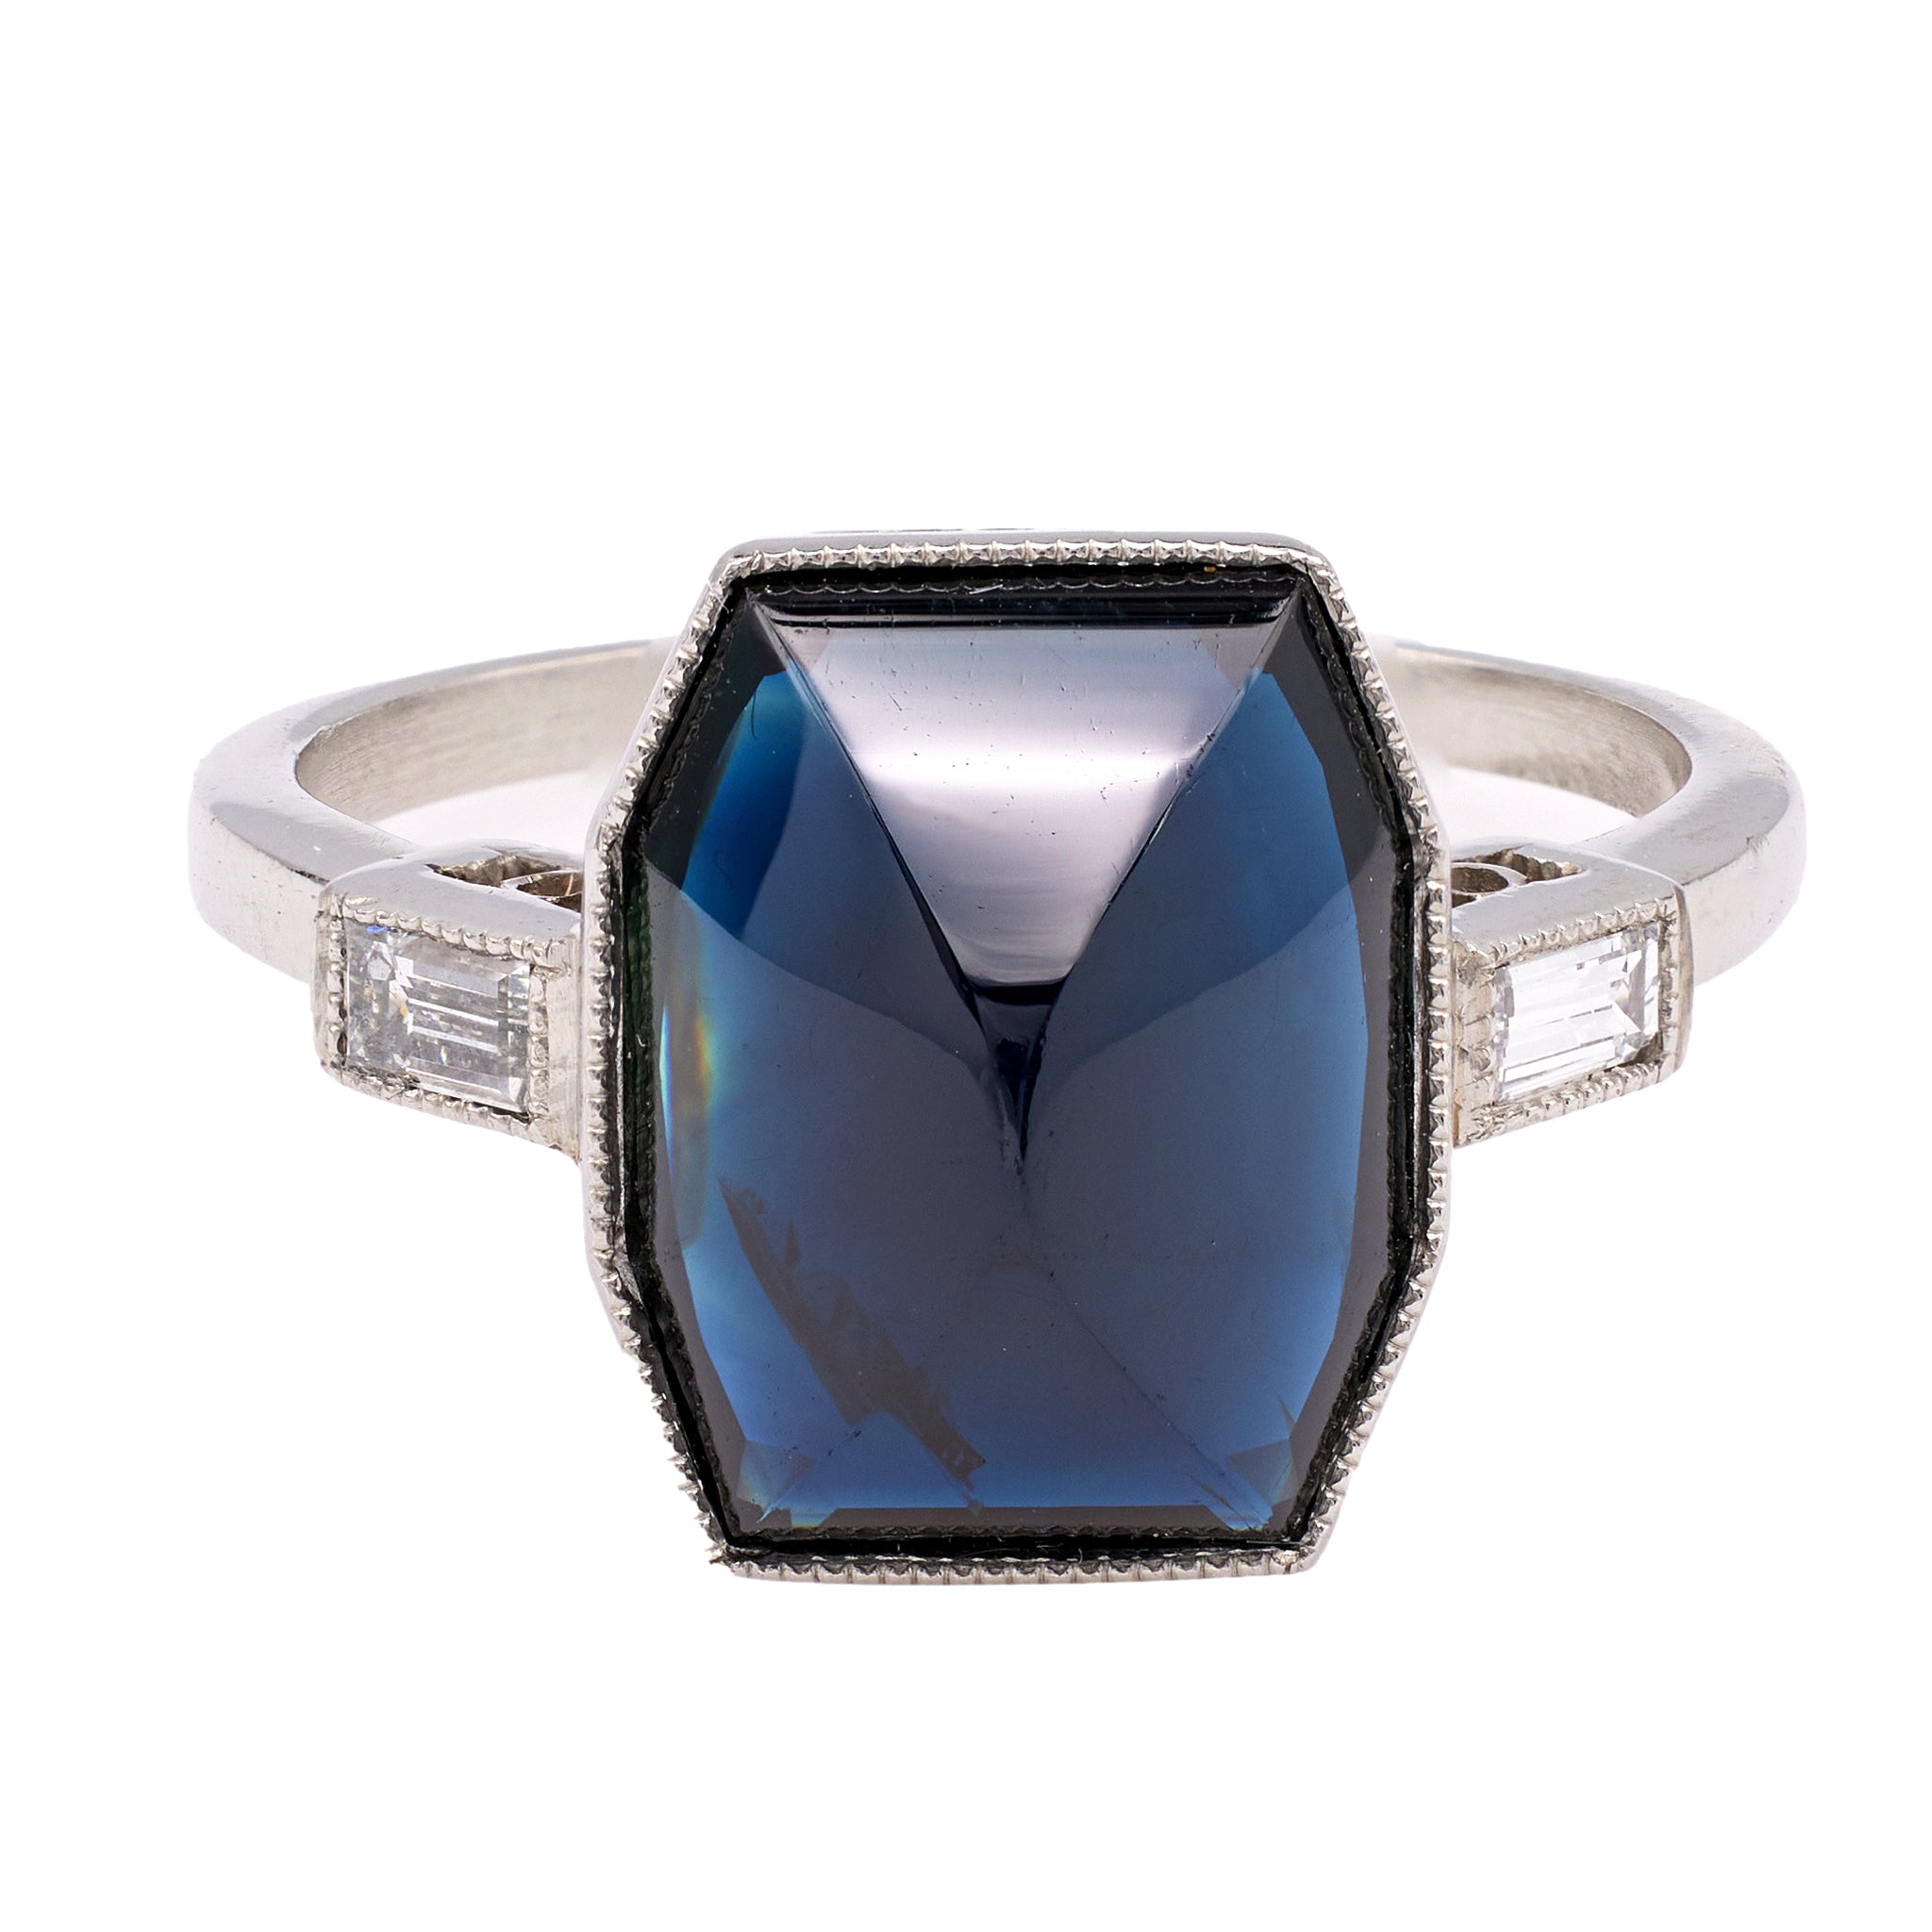 Art Deco Inspired 6.92 Carat Sapphire and Diamond Platinum Ring